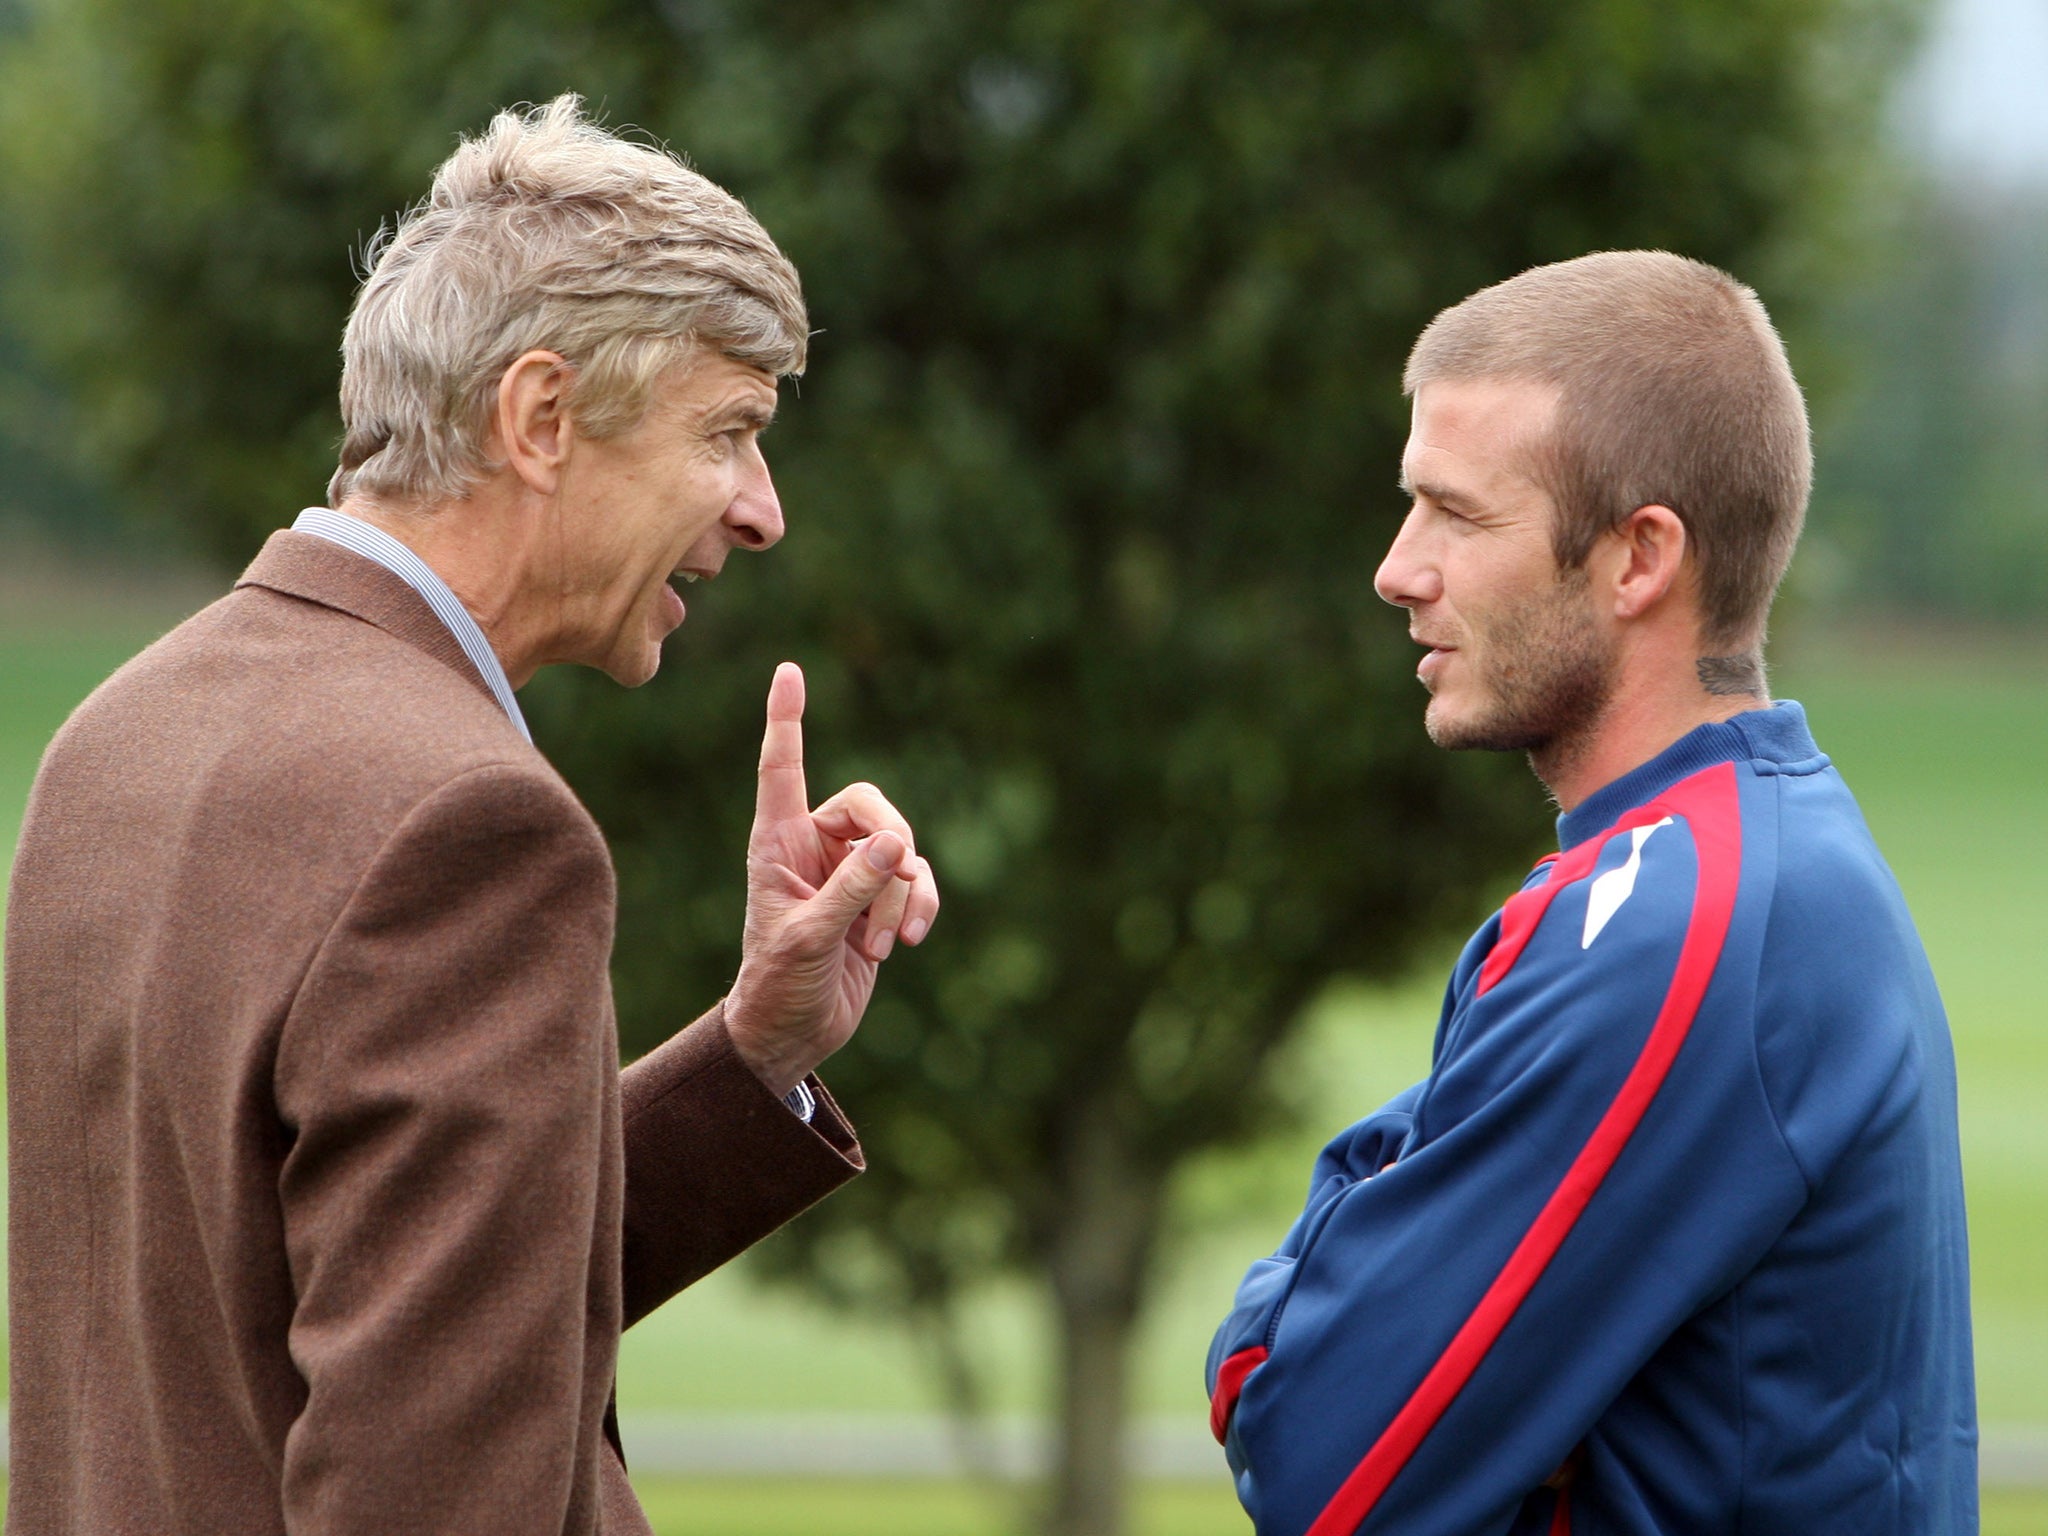 Arsene Wenger speaks with David Beckham during an Arsenal training session in 2007